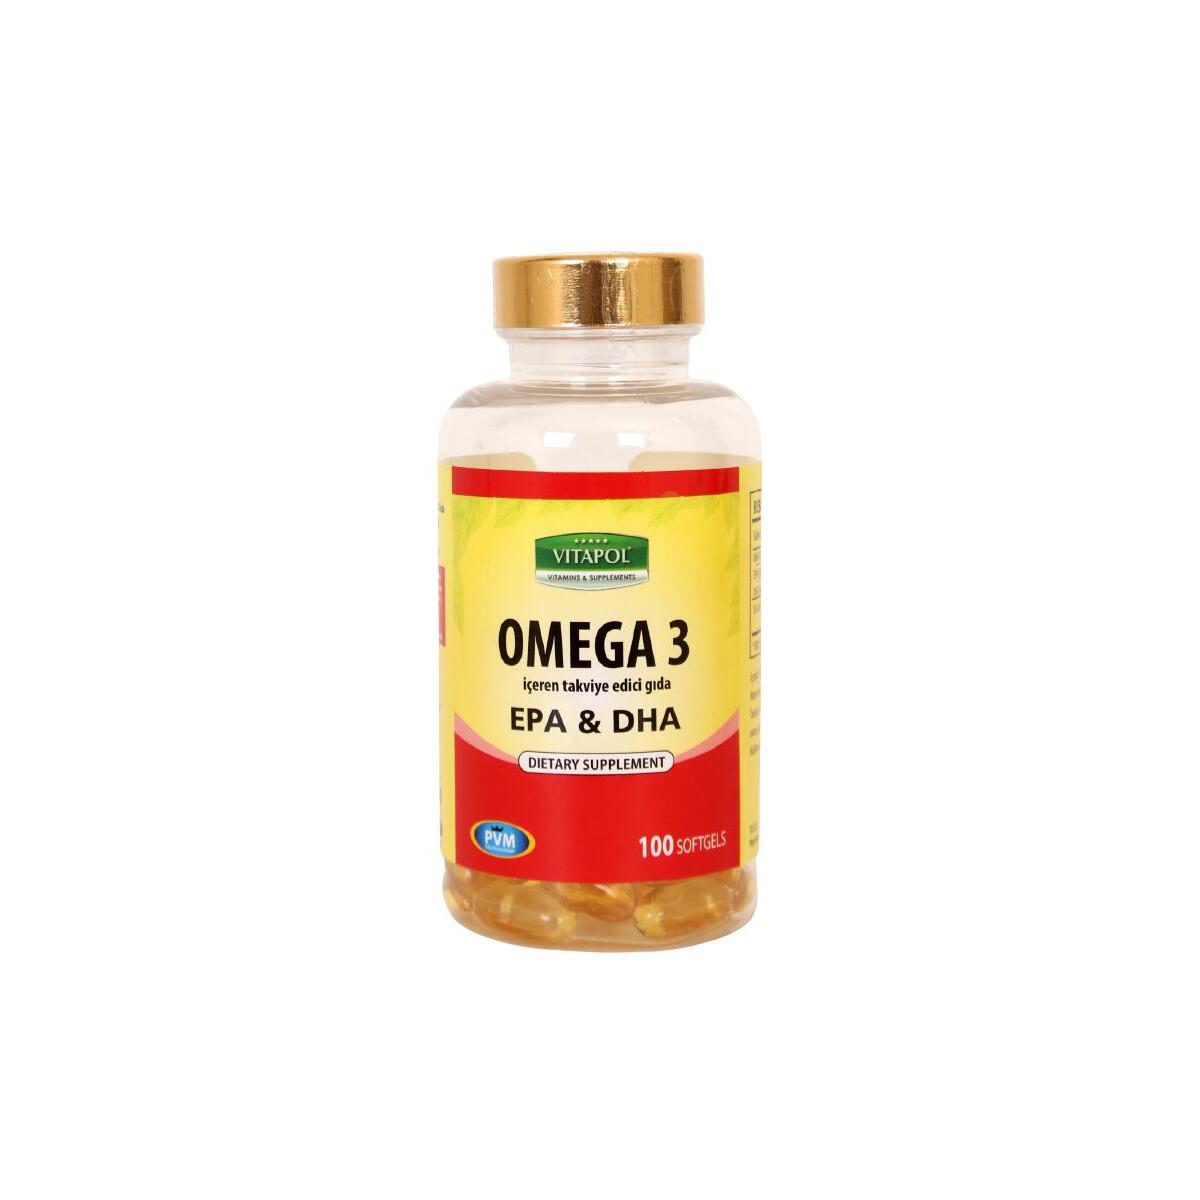 Vitapol Balık Yağı 1000 Mg Omega 3 100 Softgel